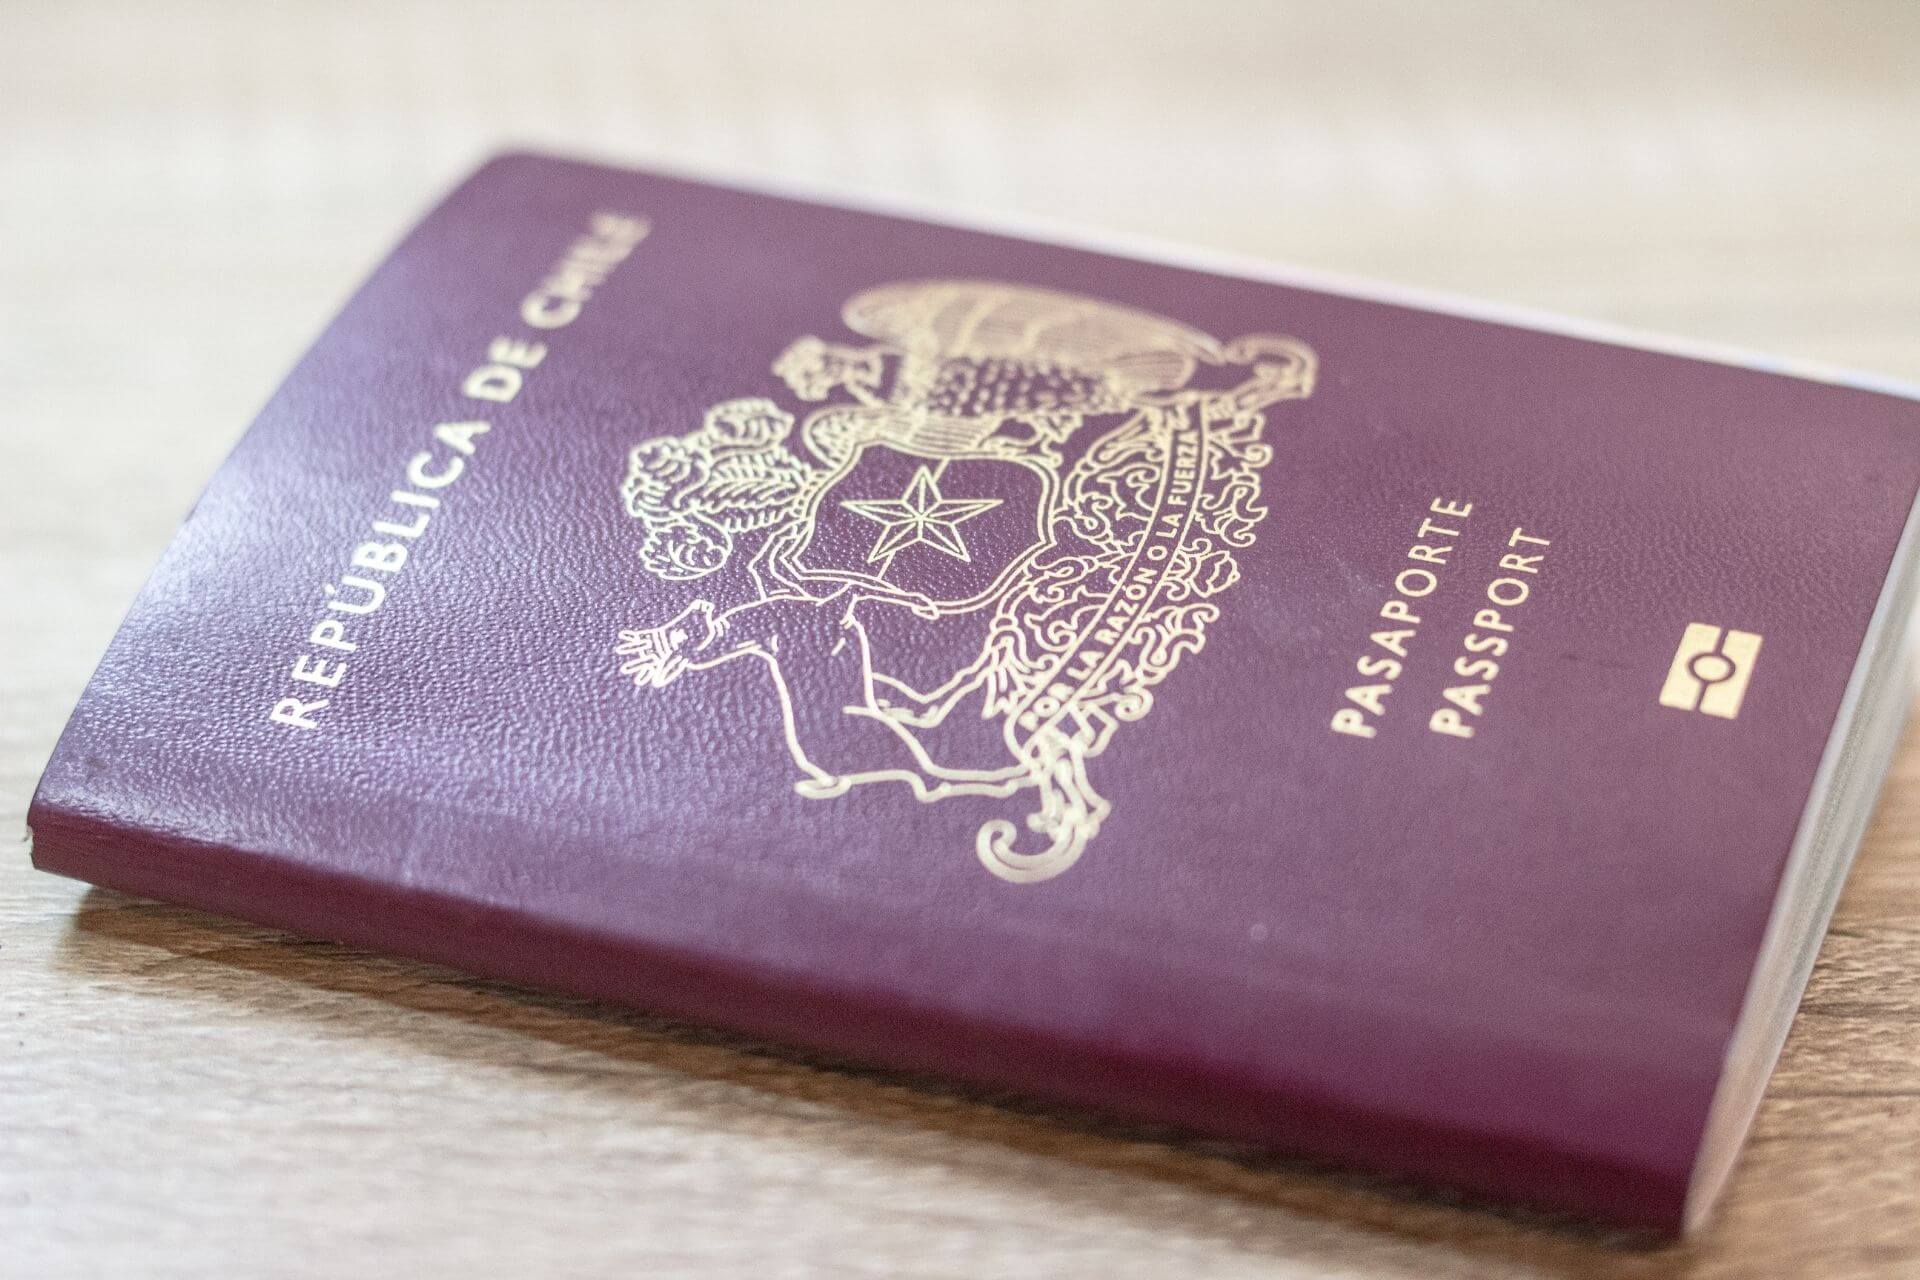 El nuevo precio del pasaporte chileno - Turismo